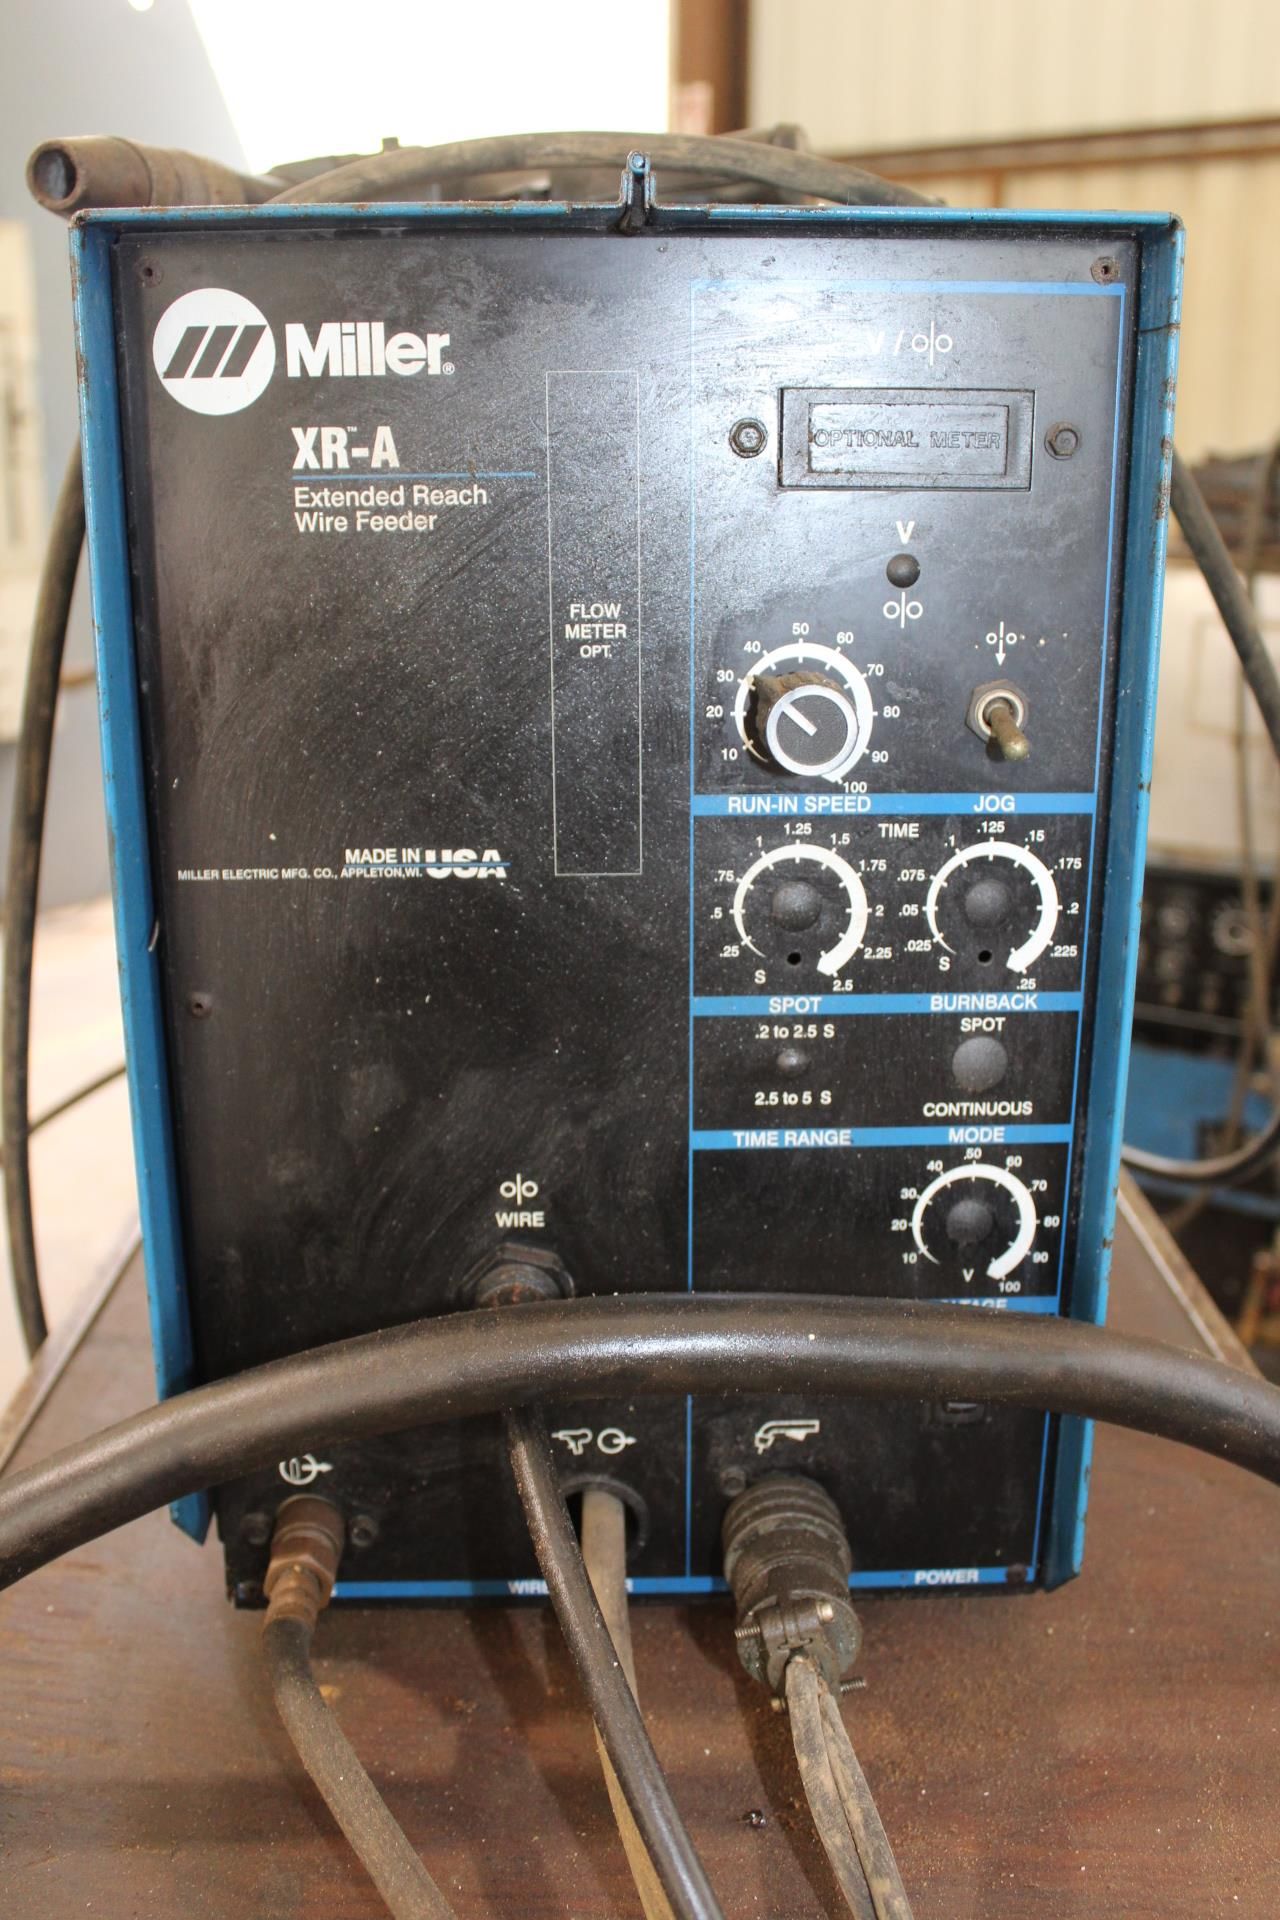 (1) Miller XMT 304 CC/CV DC Inverter Arc Welder and (1) Miller XR-A Extended Reach Wire Feeder - Image 2 of 5